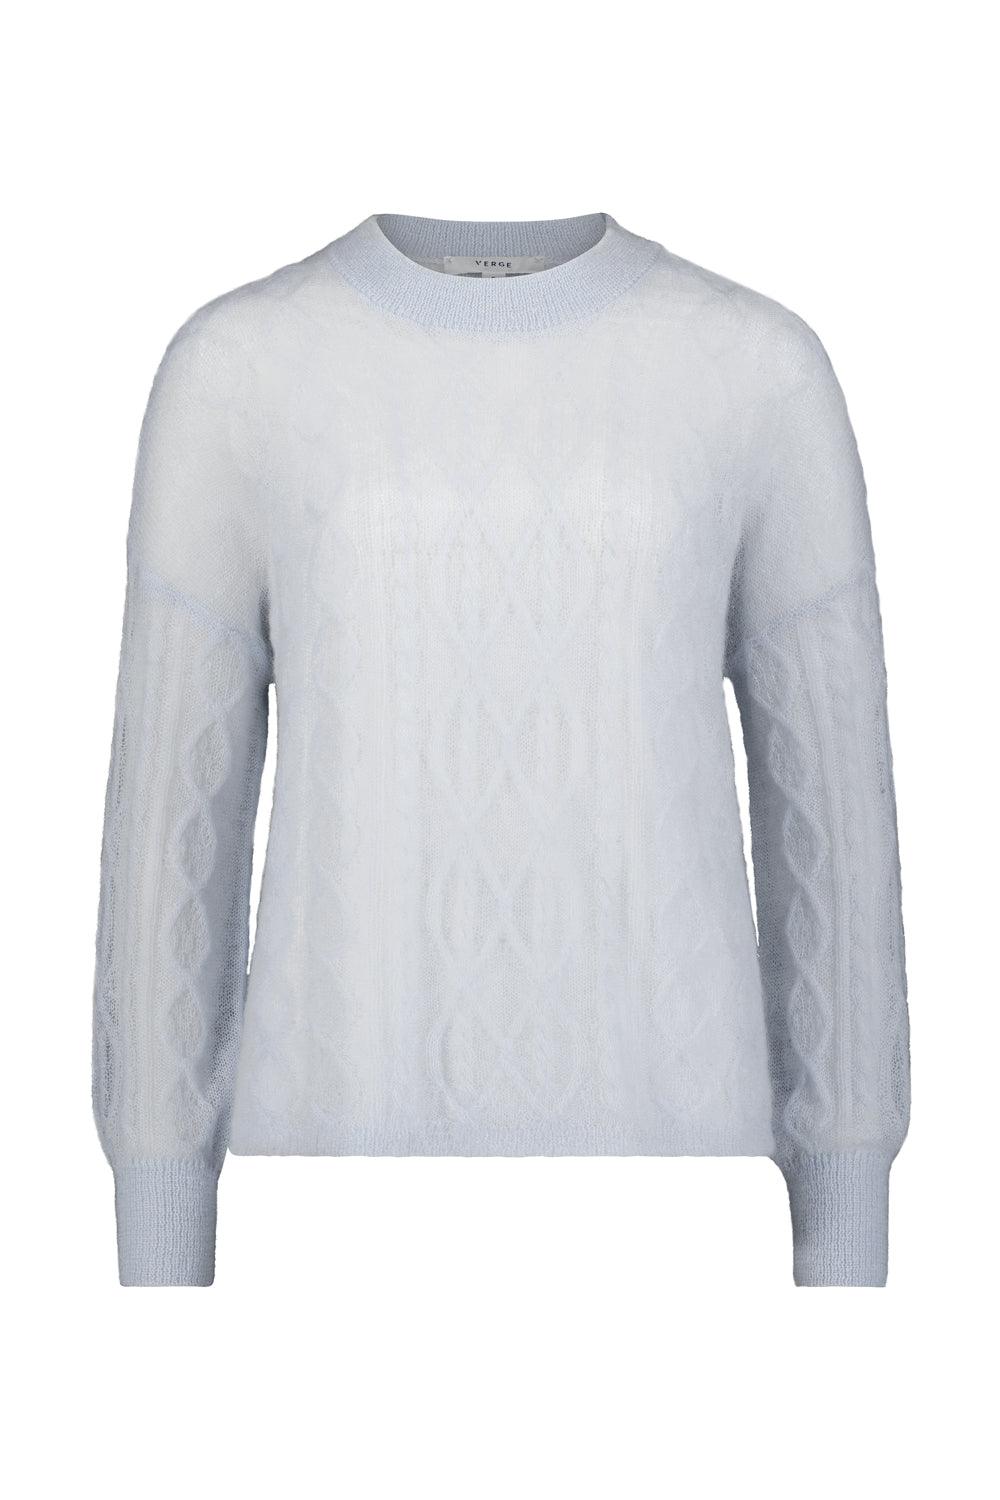 Sister Sweater - Blue Mist - Sweater VERGE